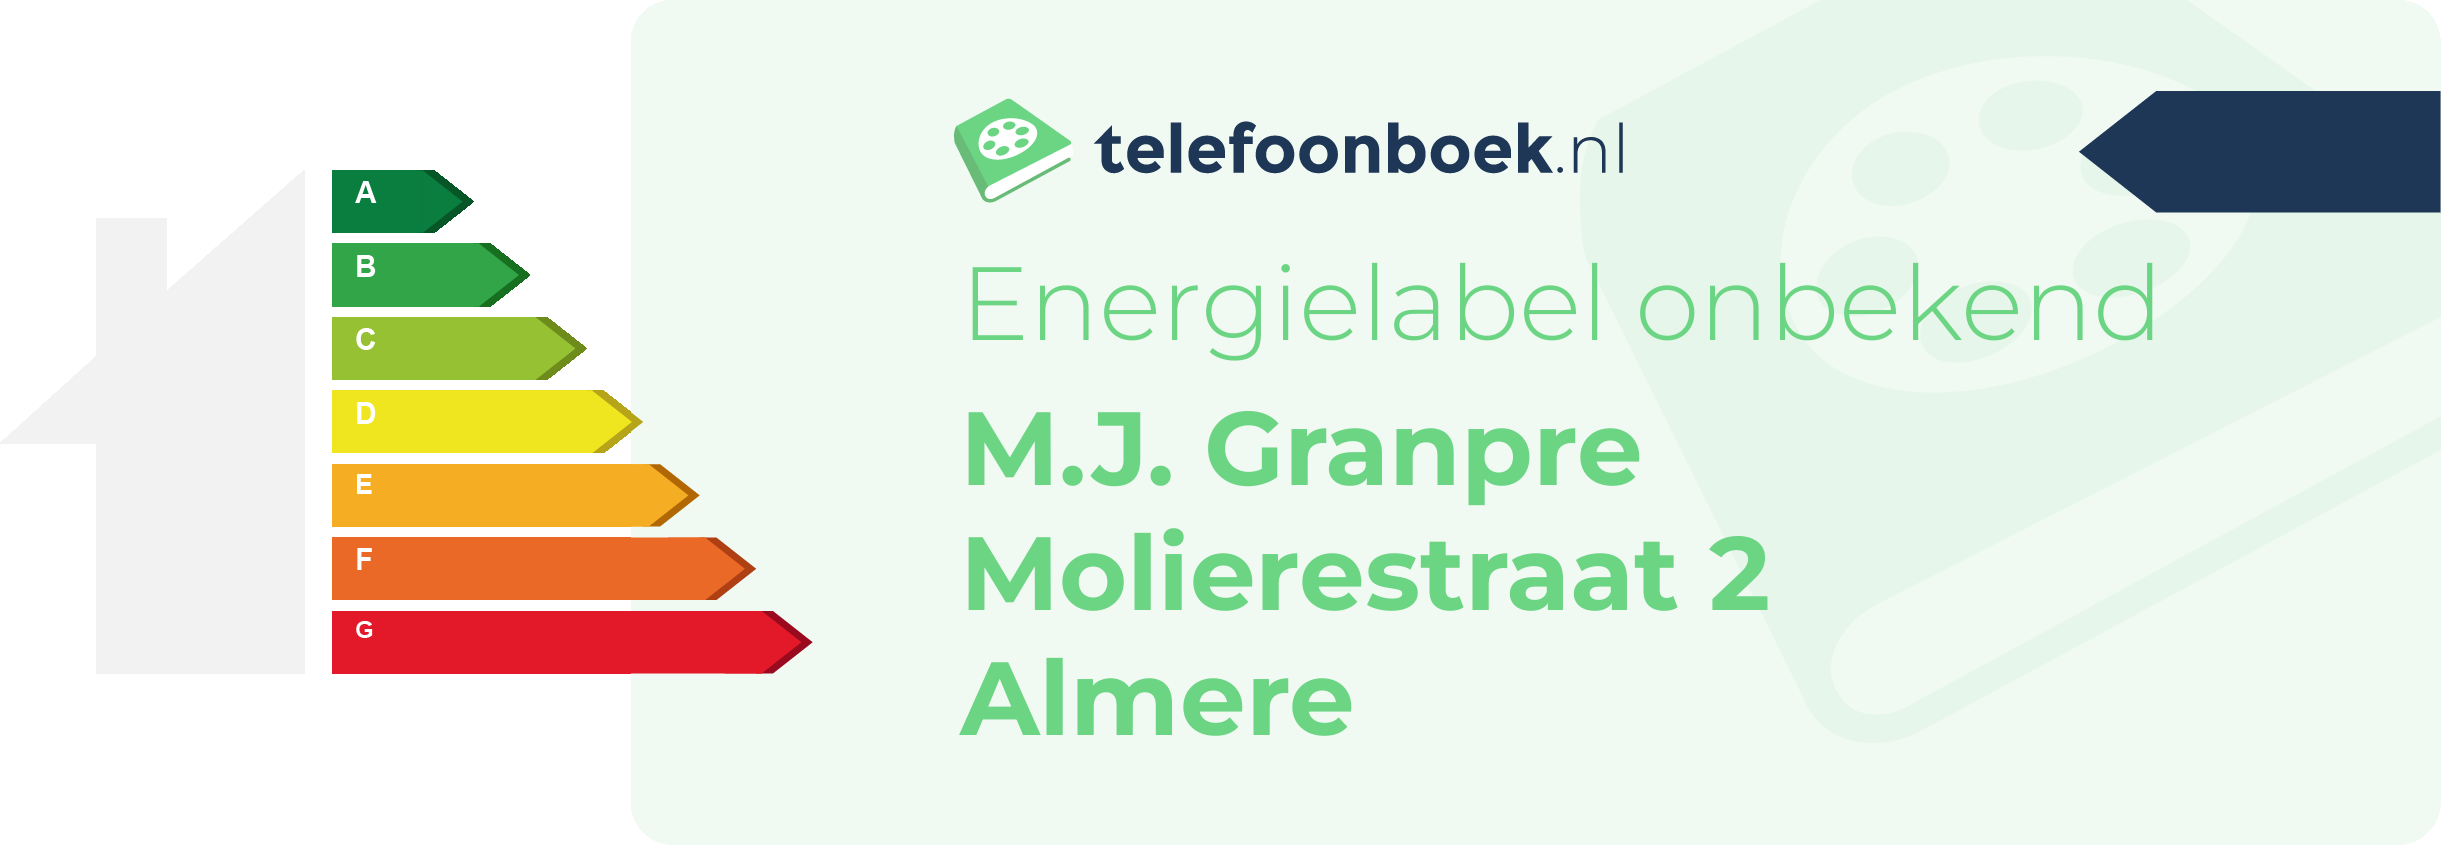 Energielabel M.J. Granpre Molierestraat 2 Almere